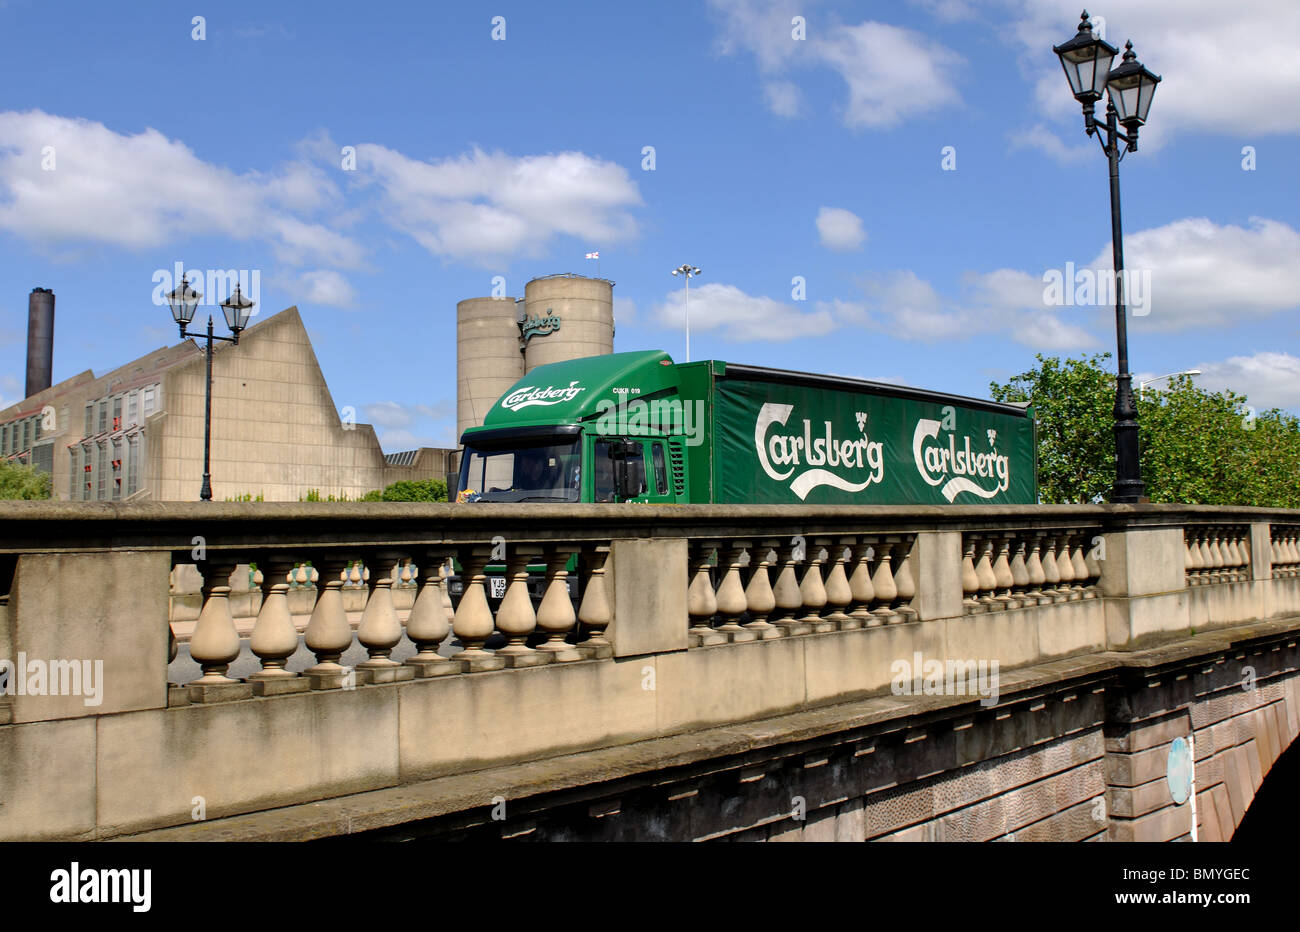 Camion Carlsberg crossing bridge par brasserie Carlsberg, Northampton, Northamptonshire, England, UK Banque D'Images